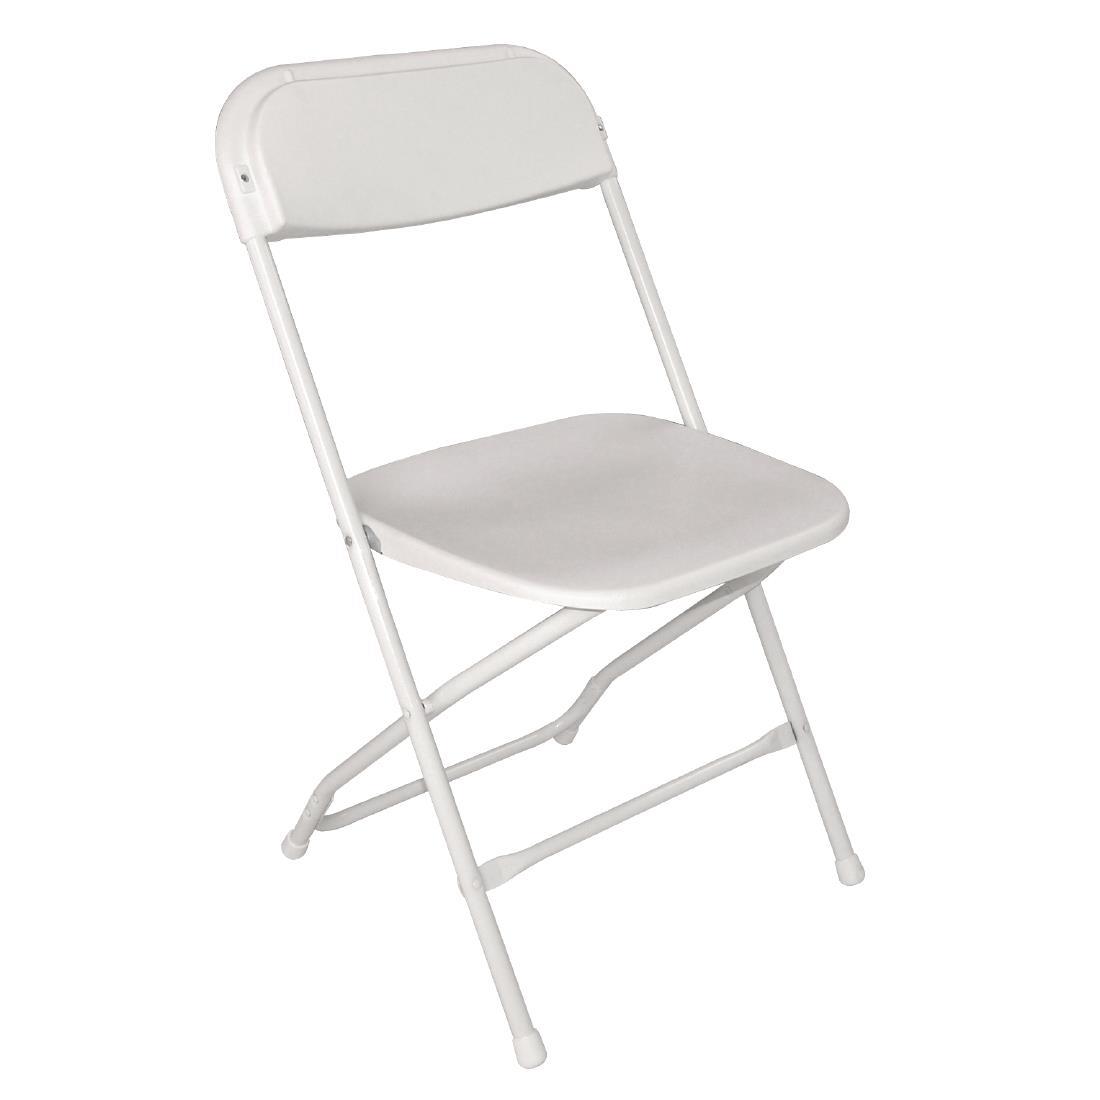 Bolero PP Folding Chairs White (Pack of 10) - GD387  - 2